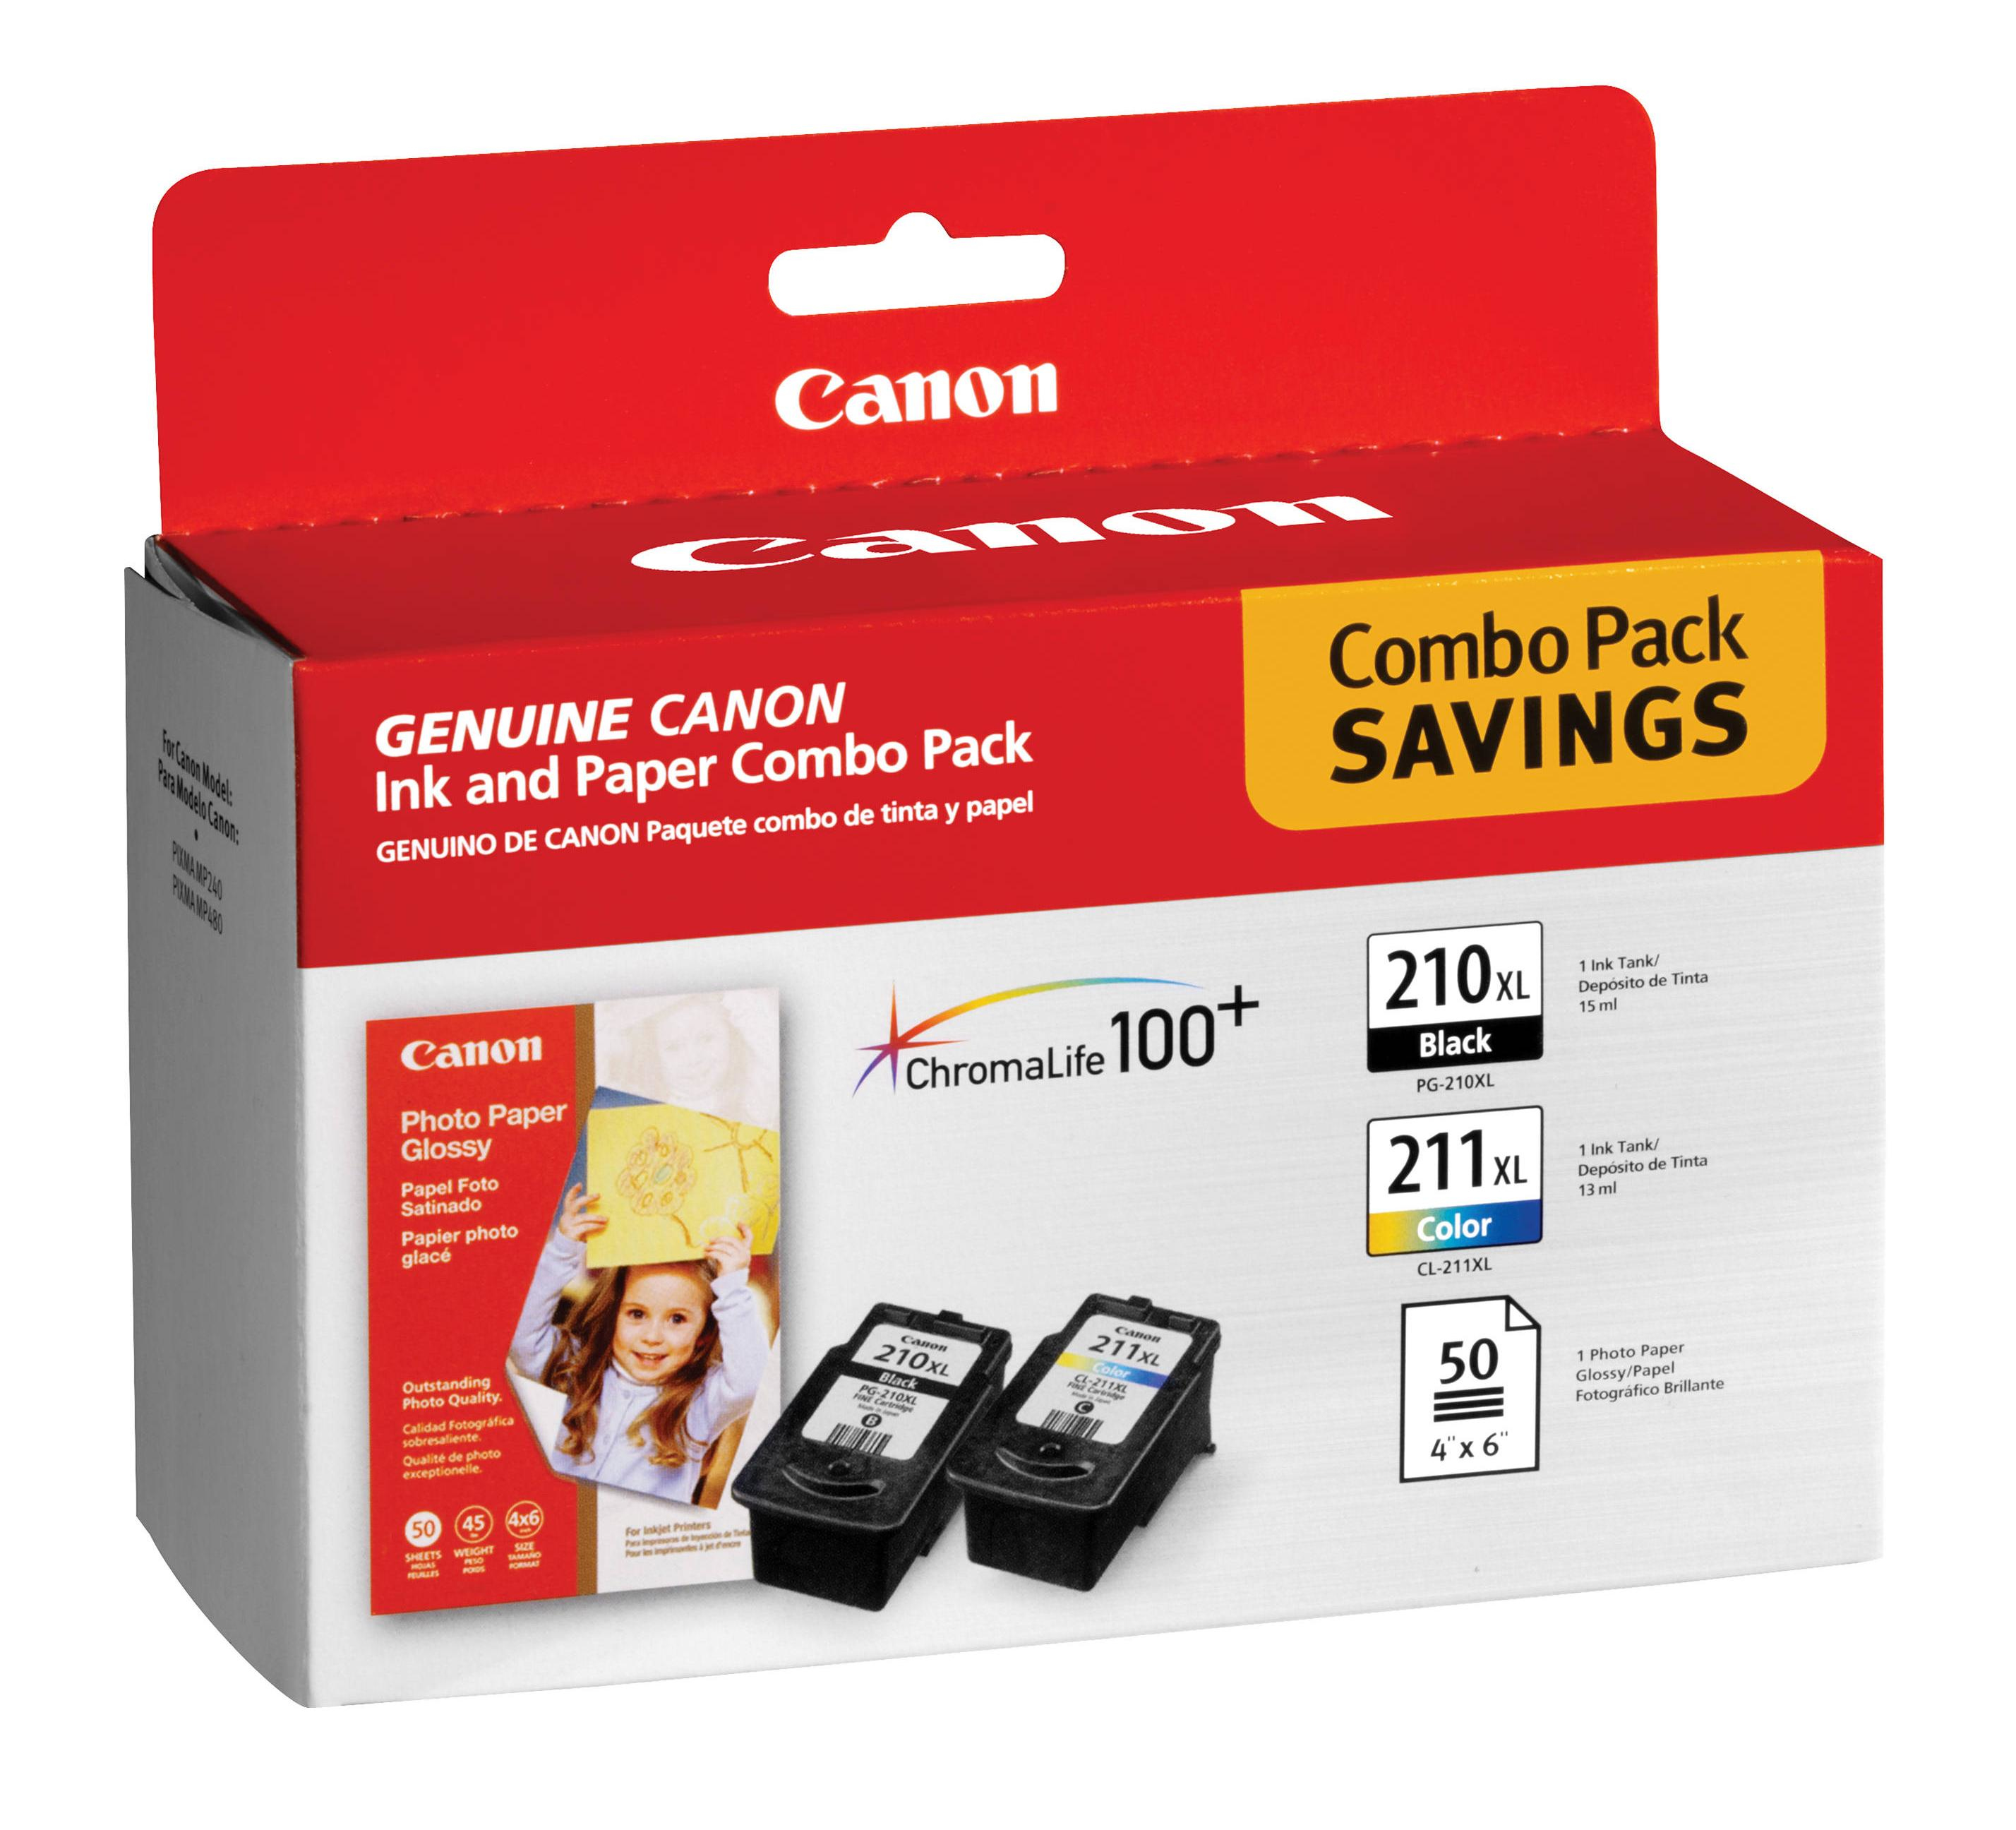 canon mp490 printer ink cartridges